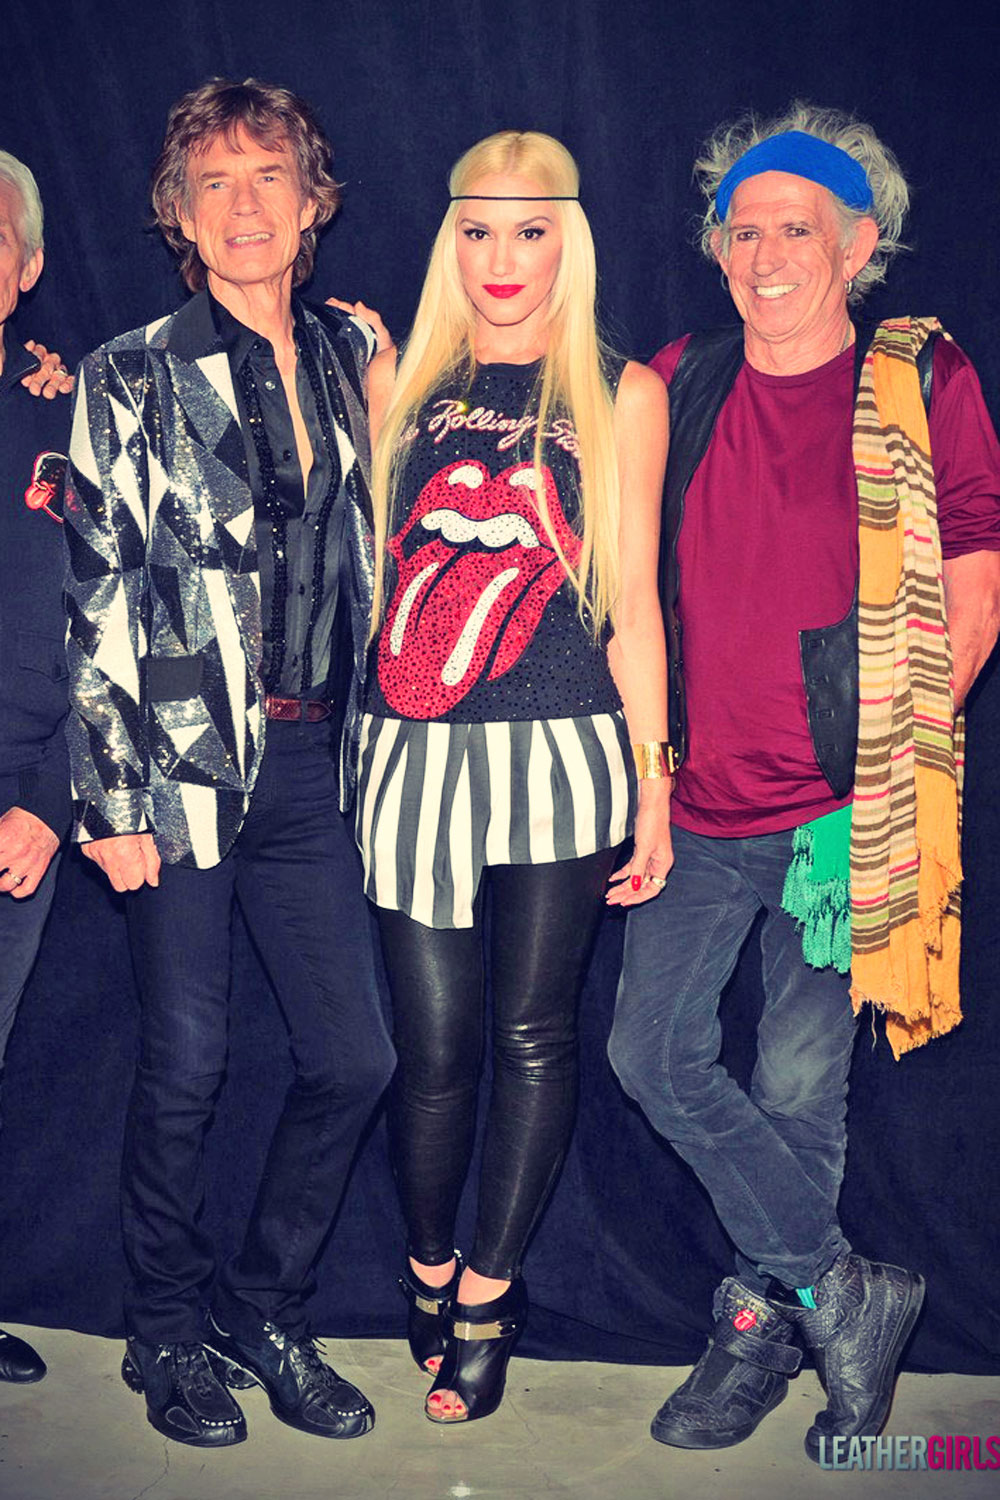 Gwen Stefani attending The Rolling Stones concert